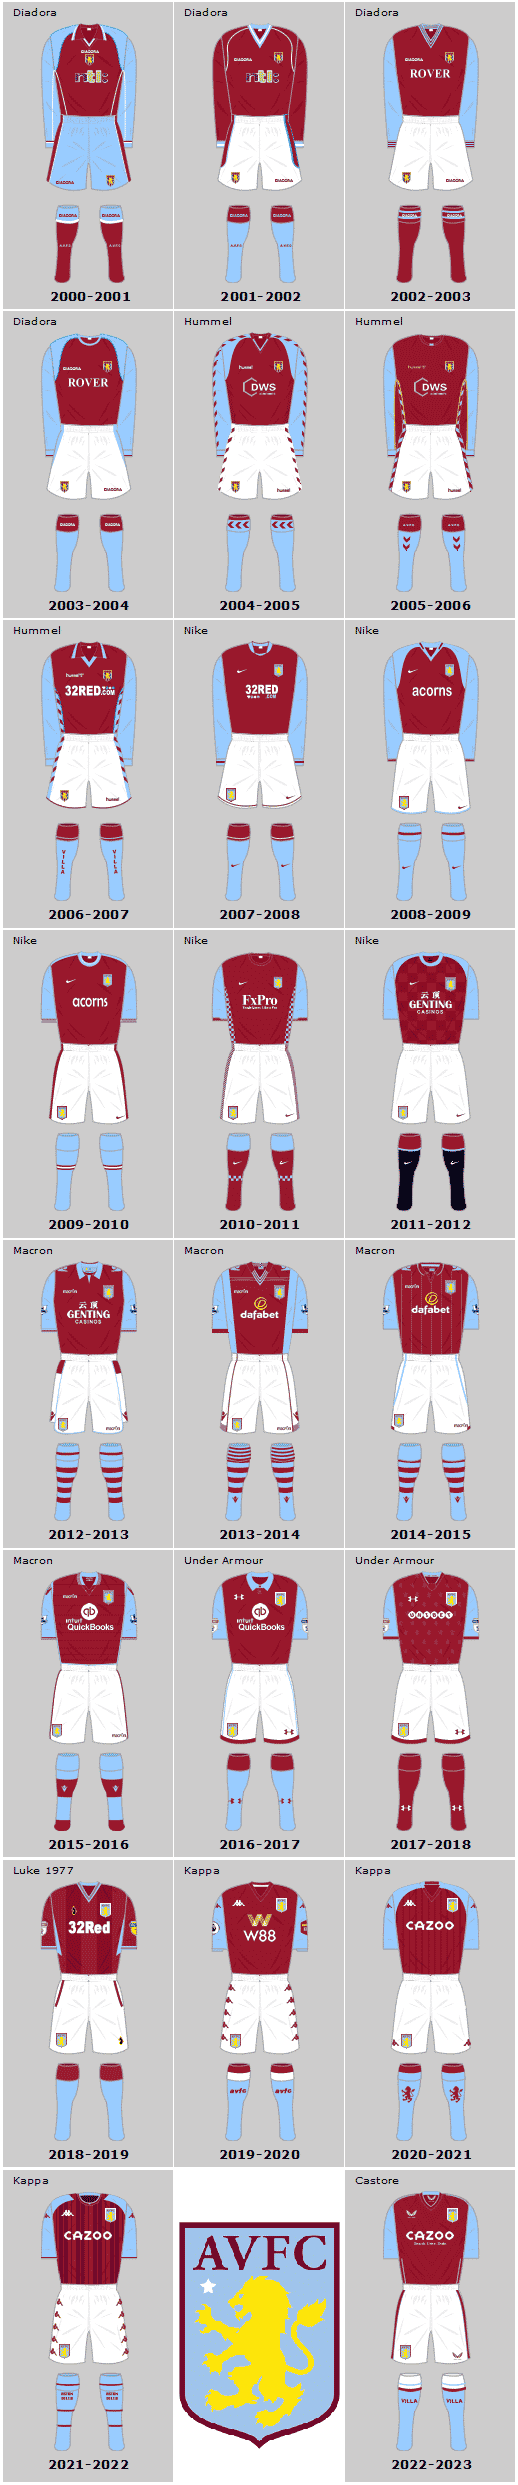 Aston Villa 21st Century Home Playing Kits